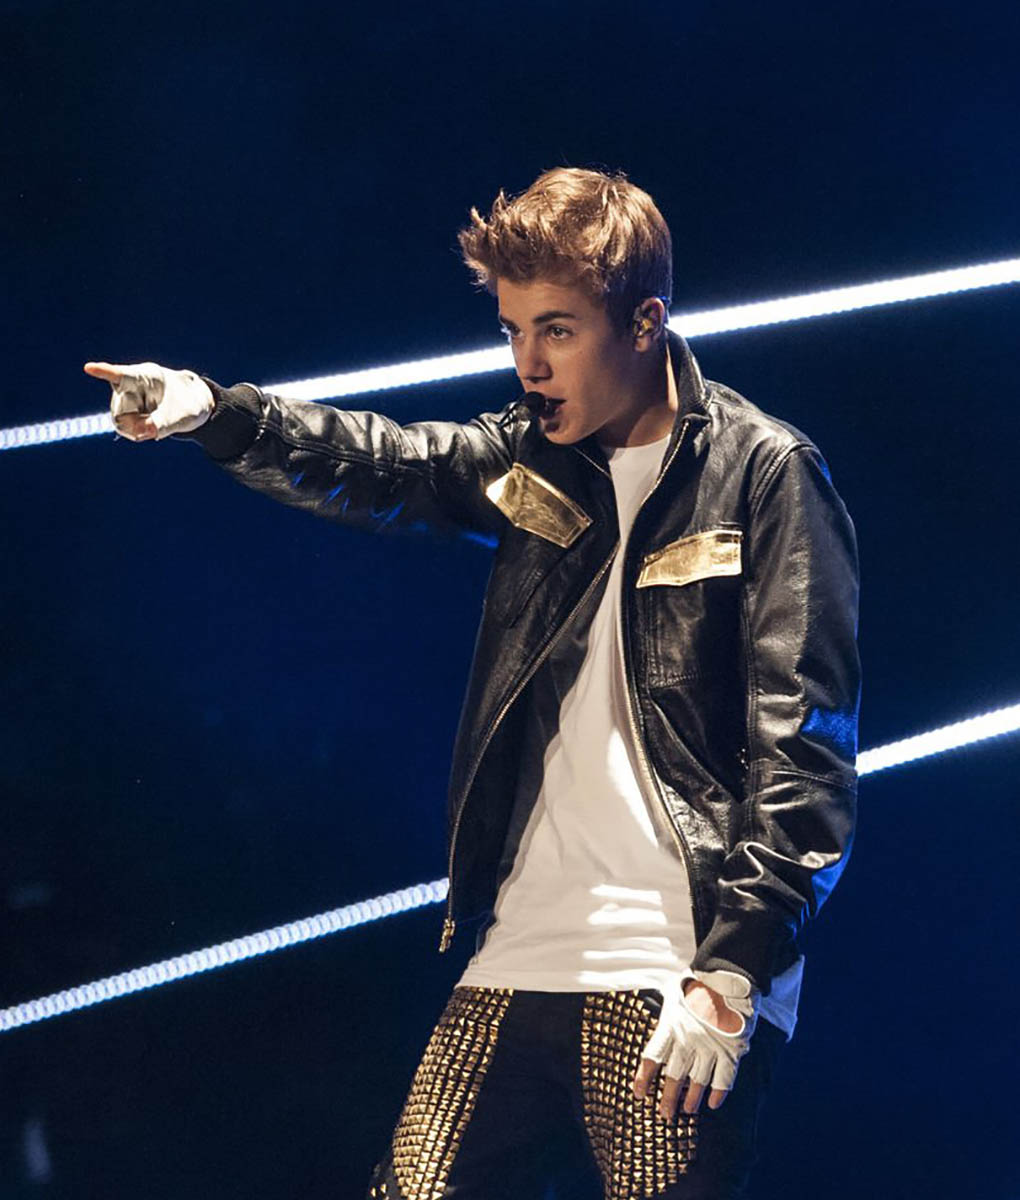 Germanys-Next-Topmodel-Justin-Bieber-Jacket